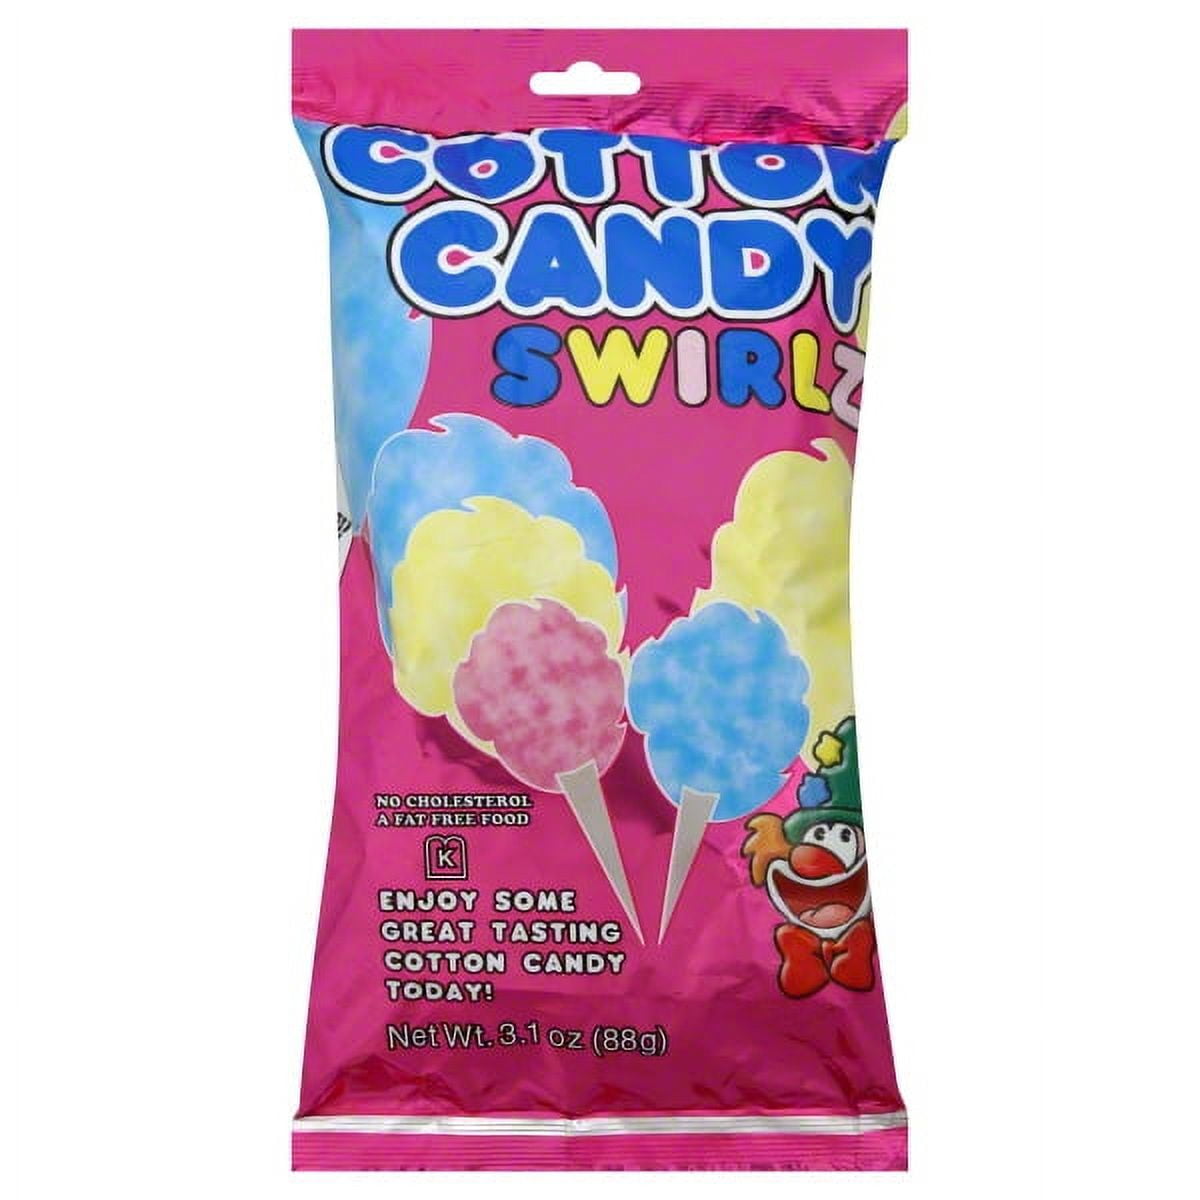 Taste of Nature Cotton Candy Swirlz 3.1 Oz Bag